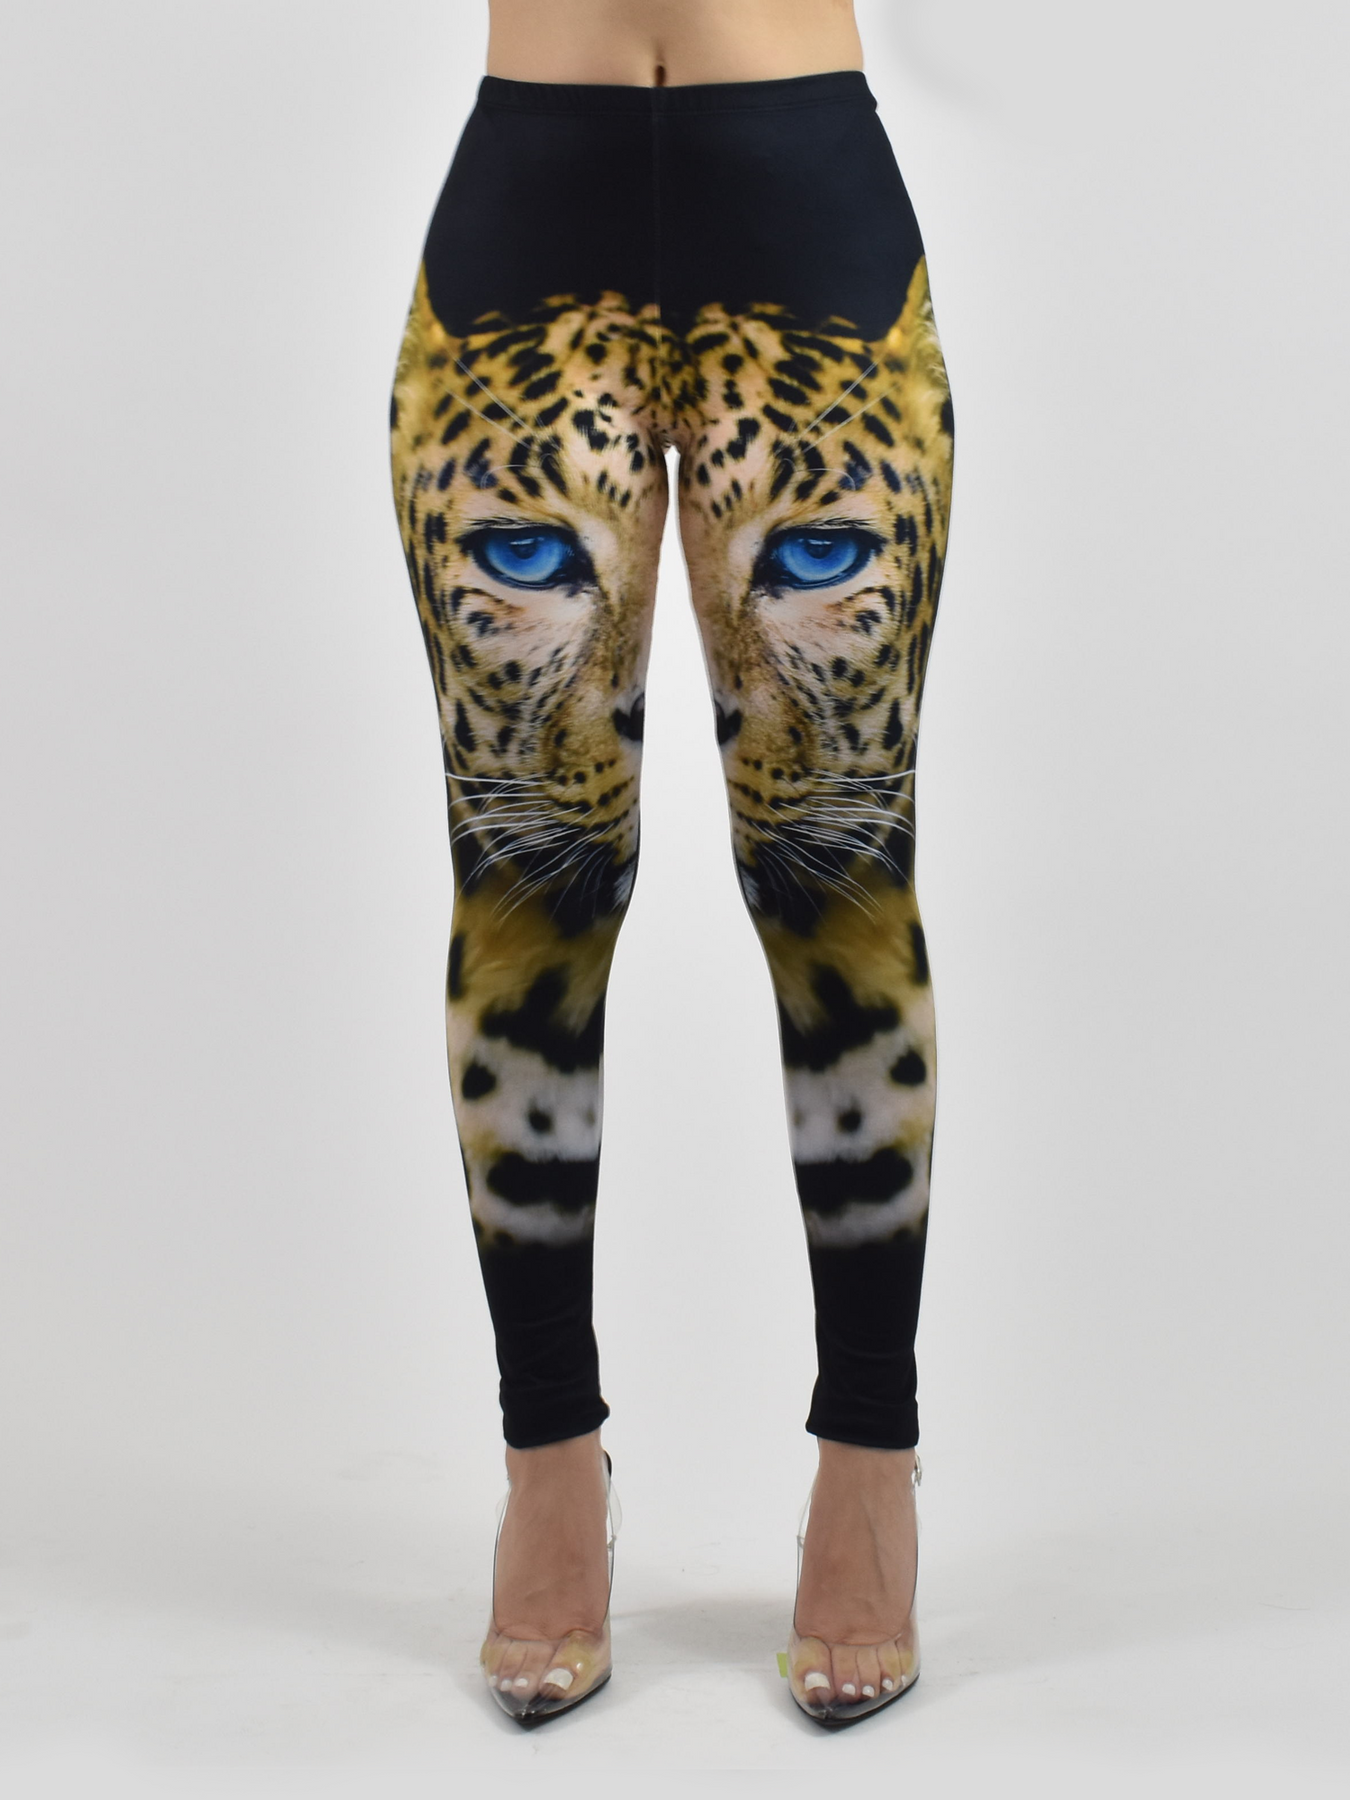 Leopard print yoga gym workout leggings in cream colour - Sophie Dibou